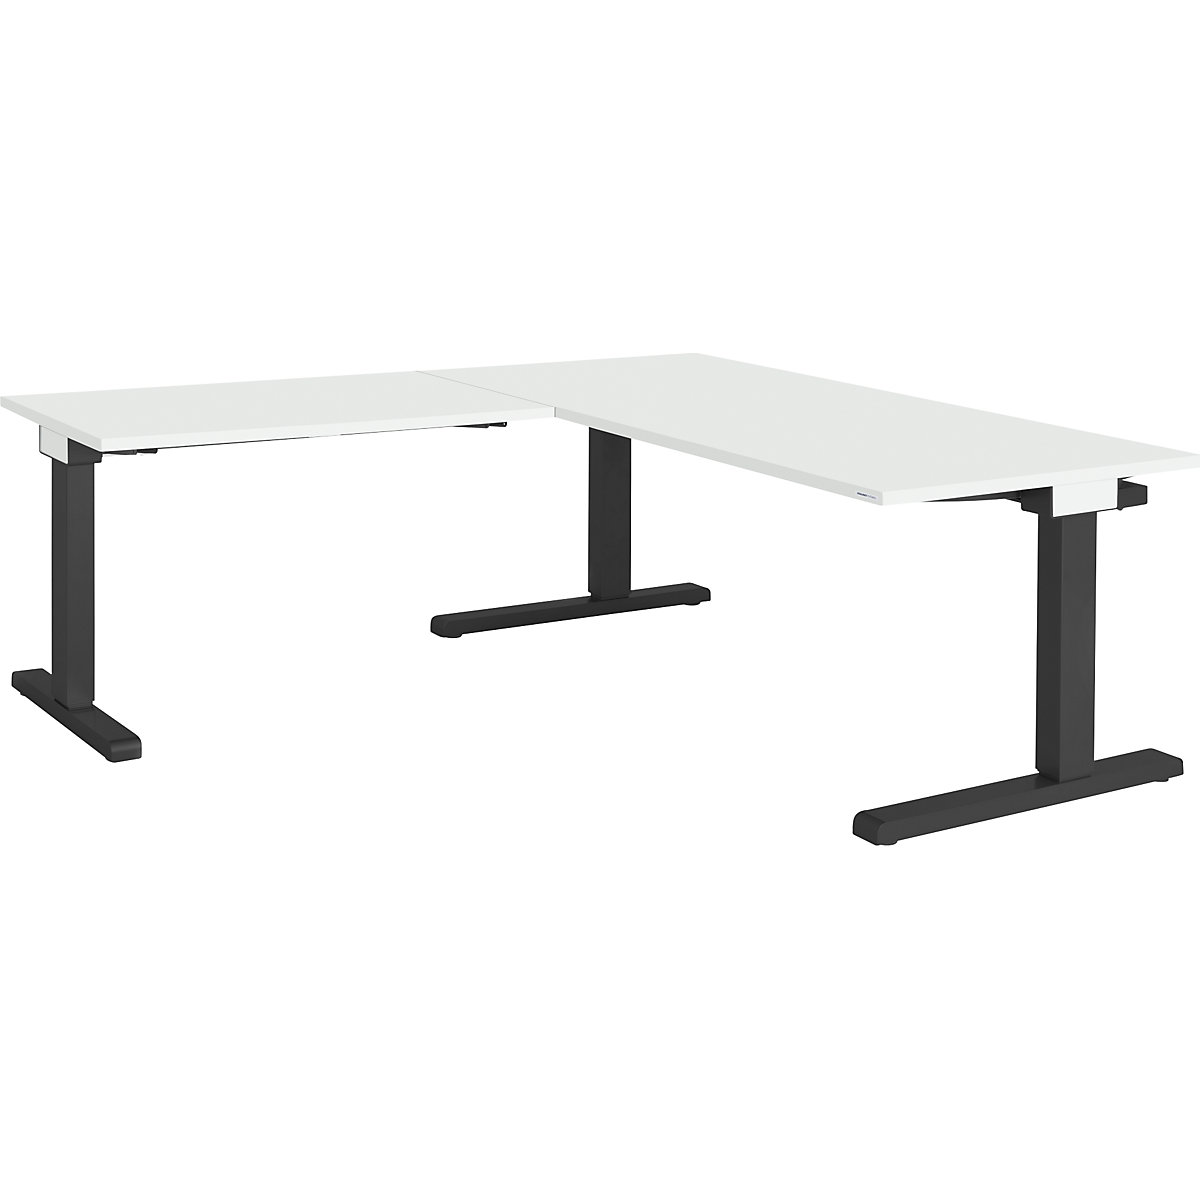 Desk, interlinked – mauser, WxD 1600 x 800 mm, angled extension on left (width 1000 mm), light grey top, charcoal frame-3